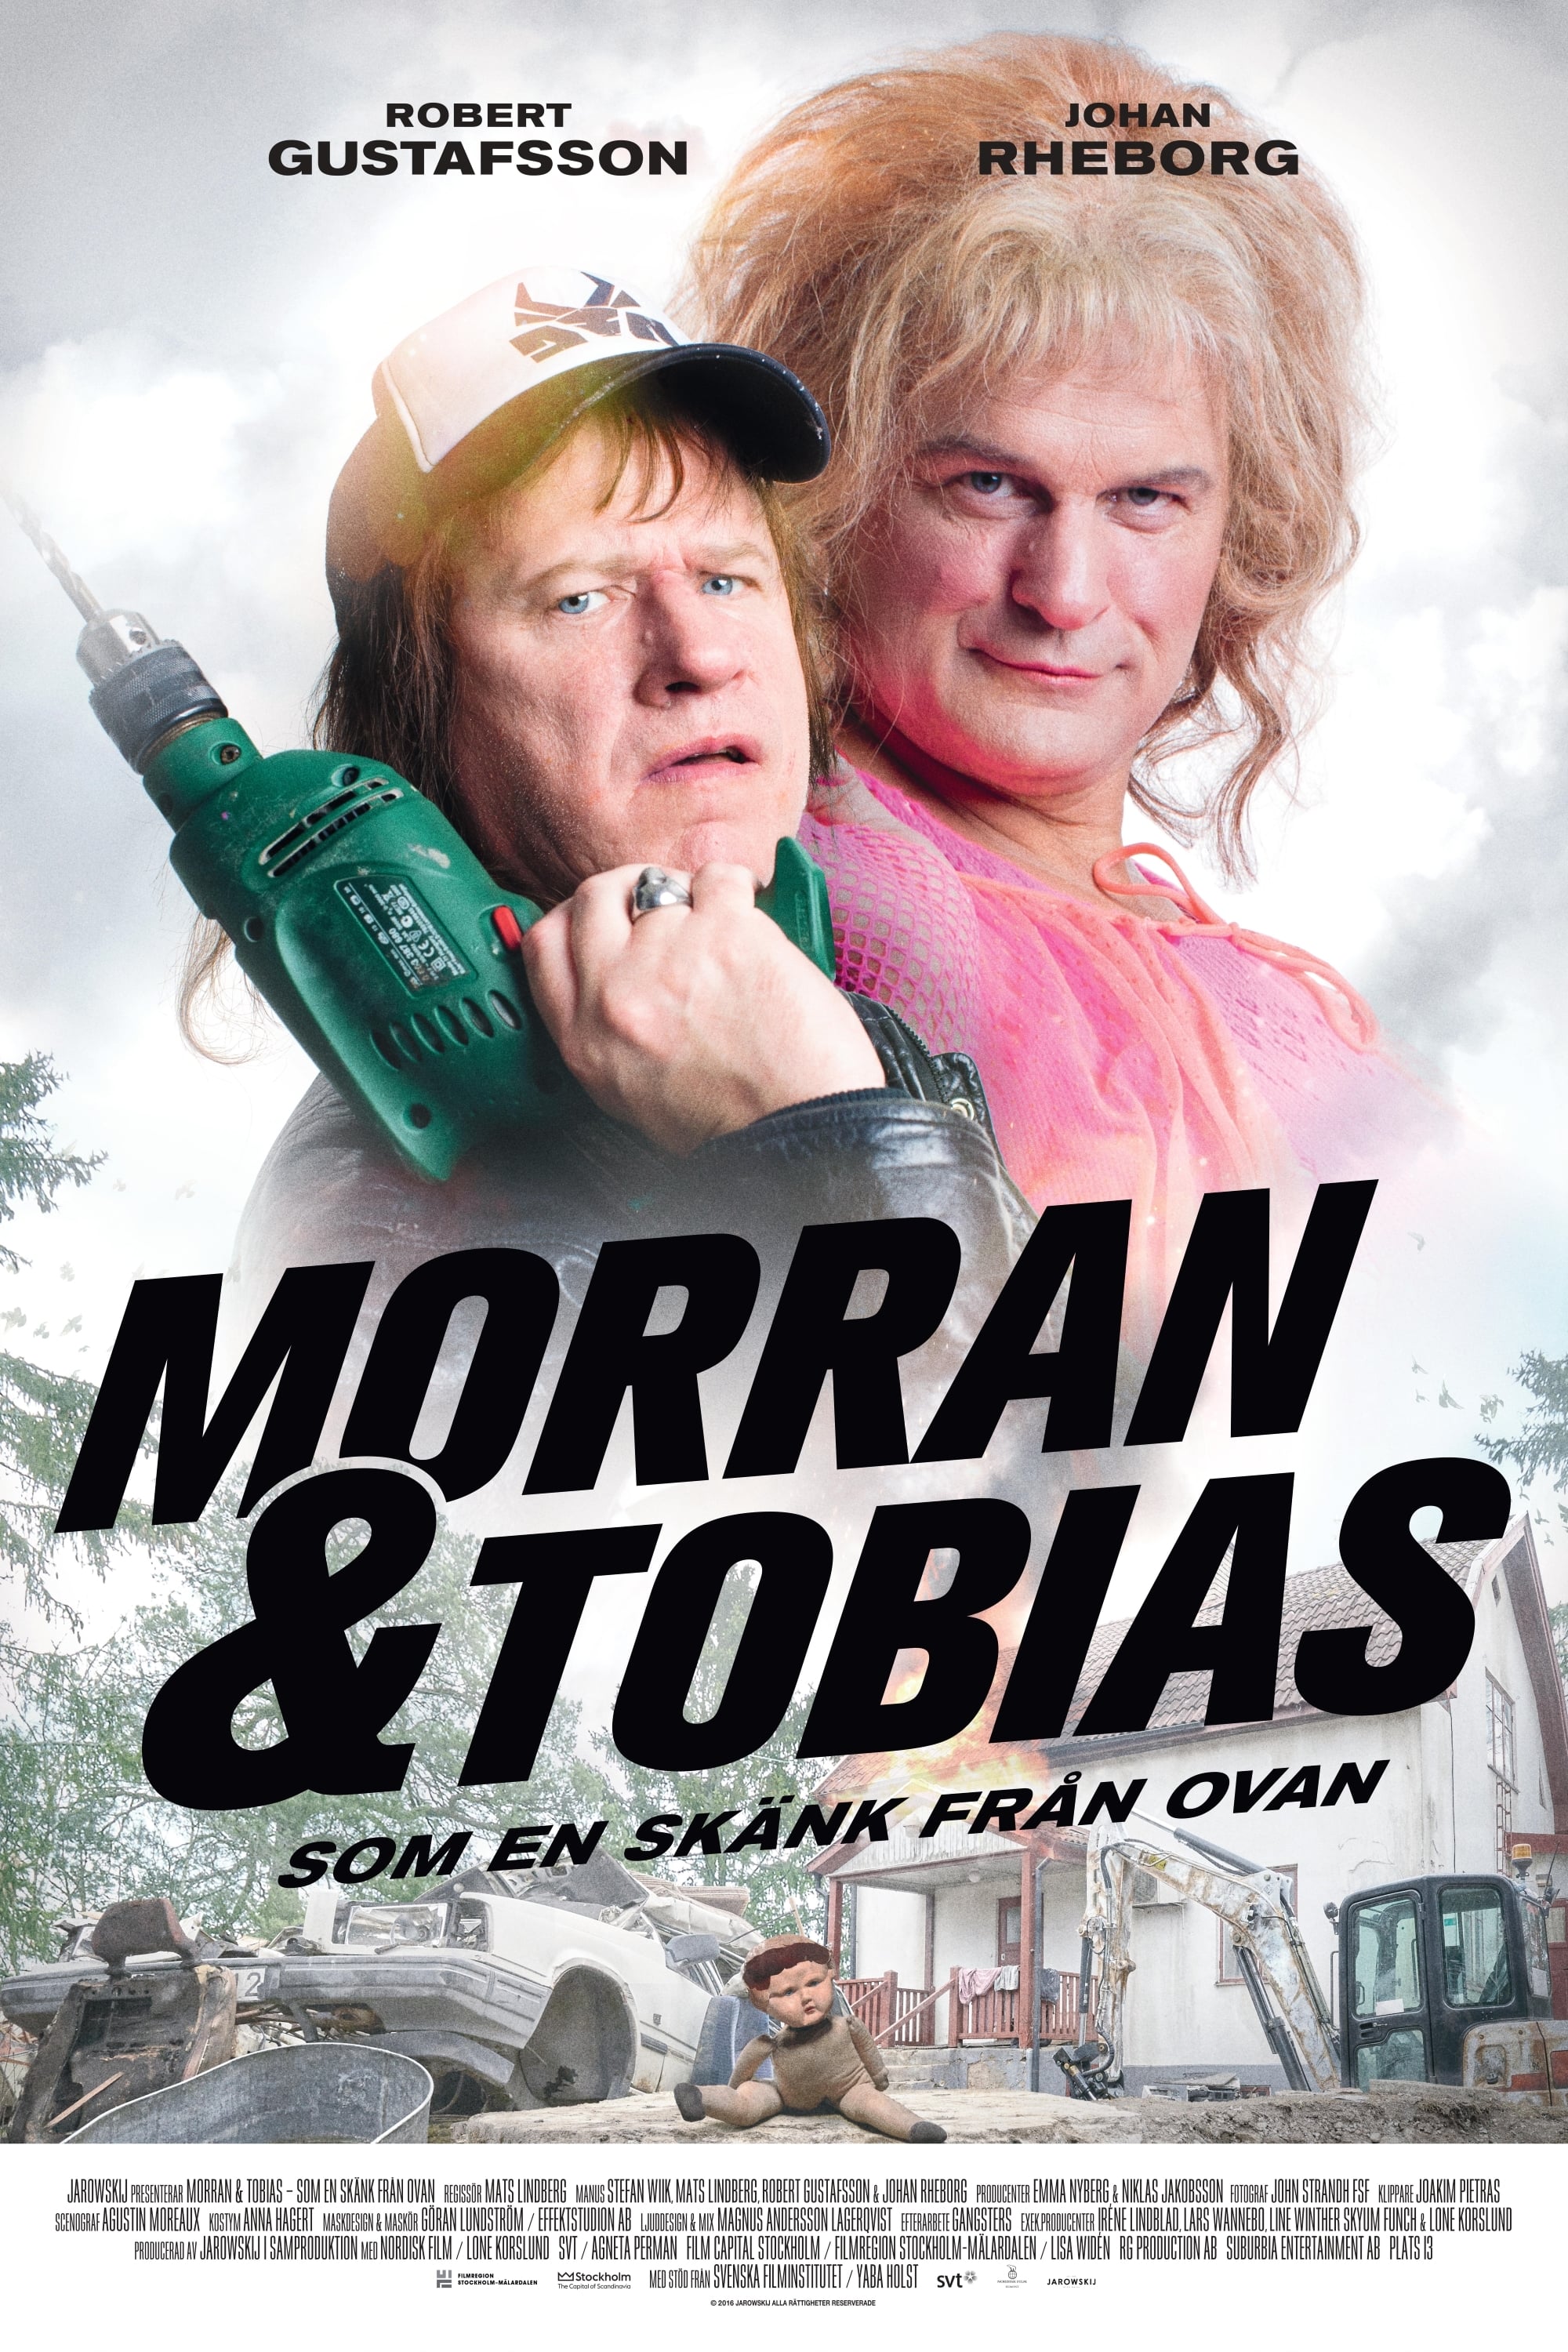 Morran & Tobias: Godsend